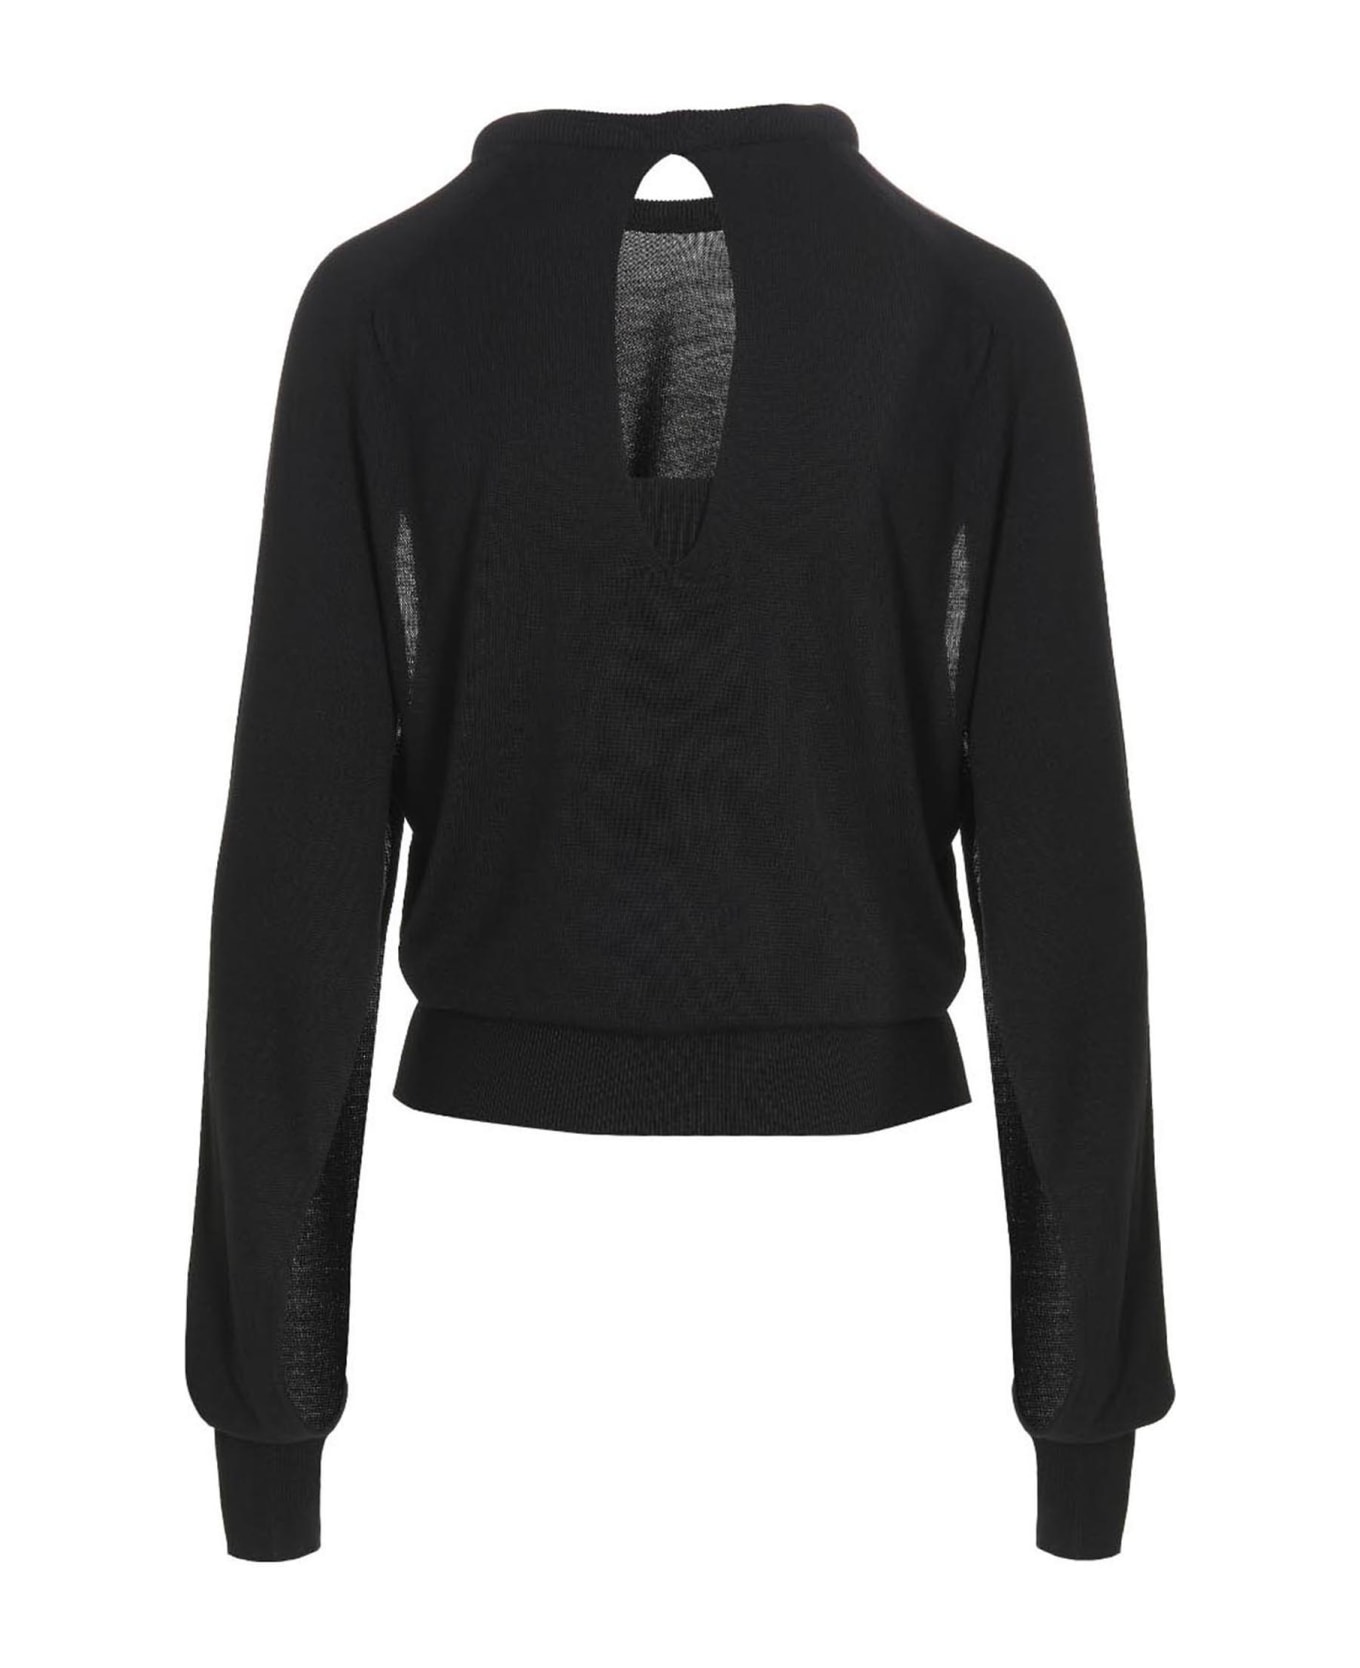 Ramael Cut Out Insert Top Sweater - Black  